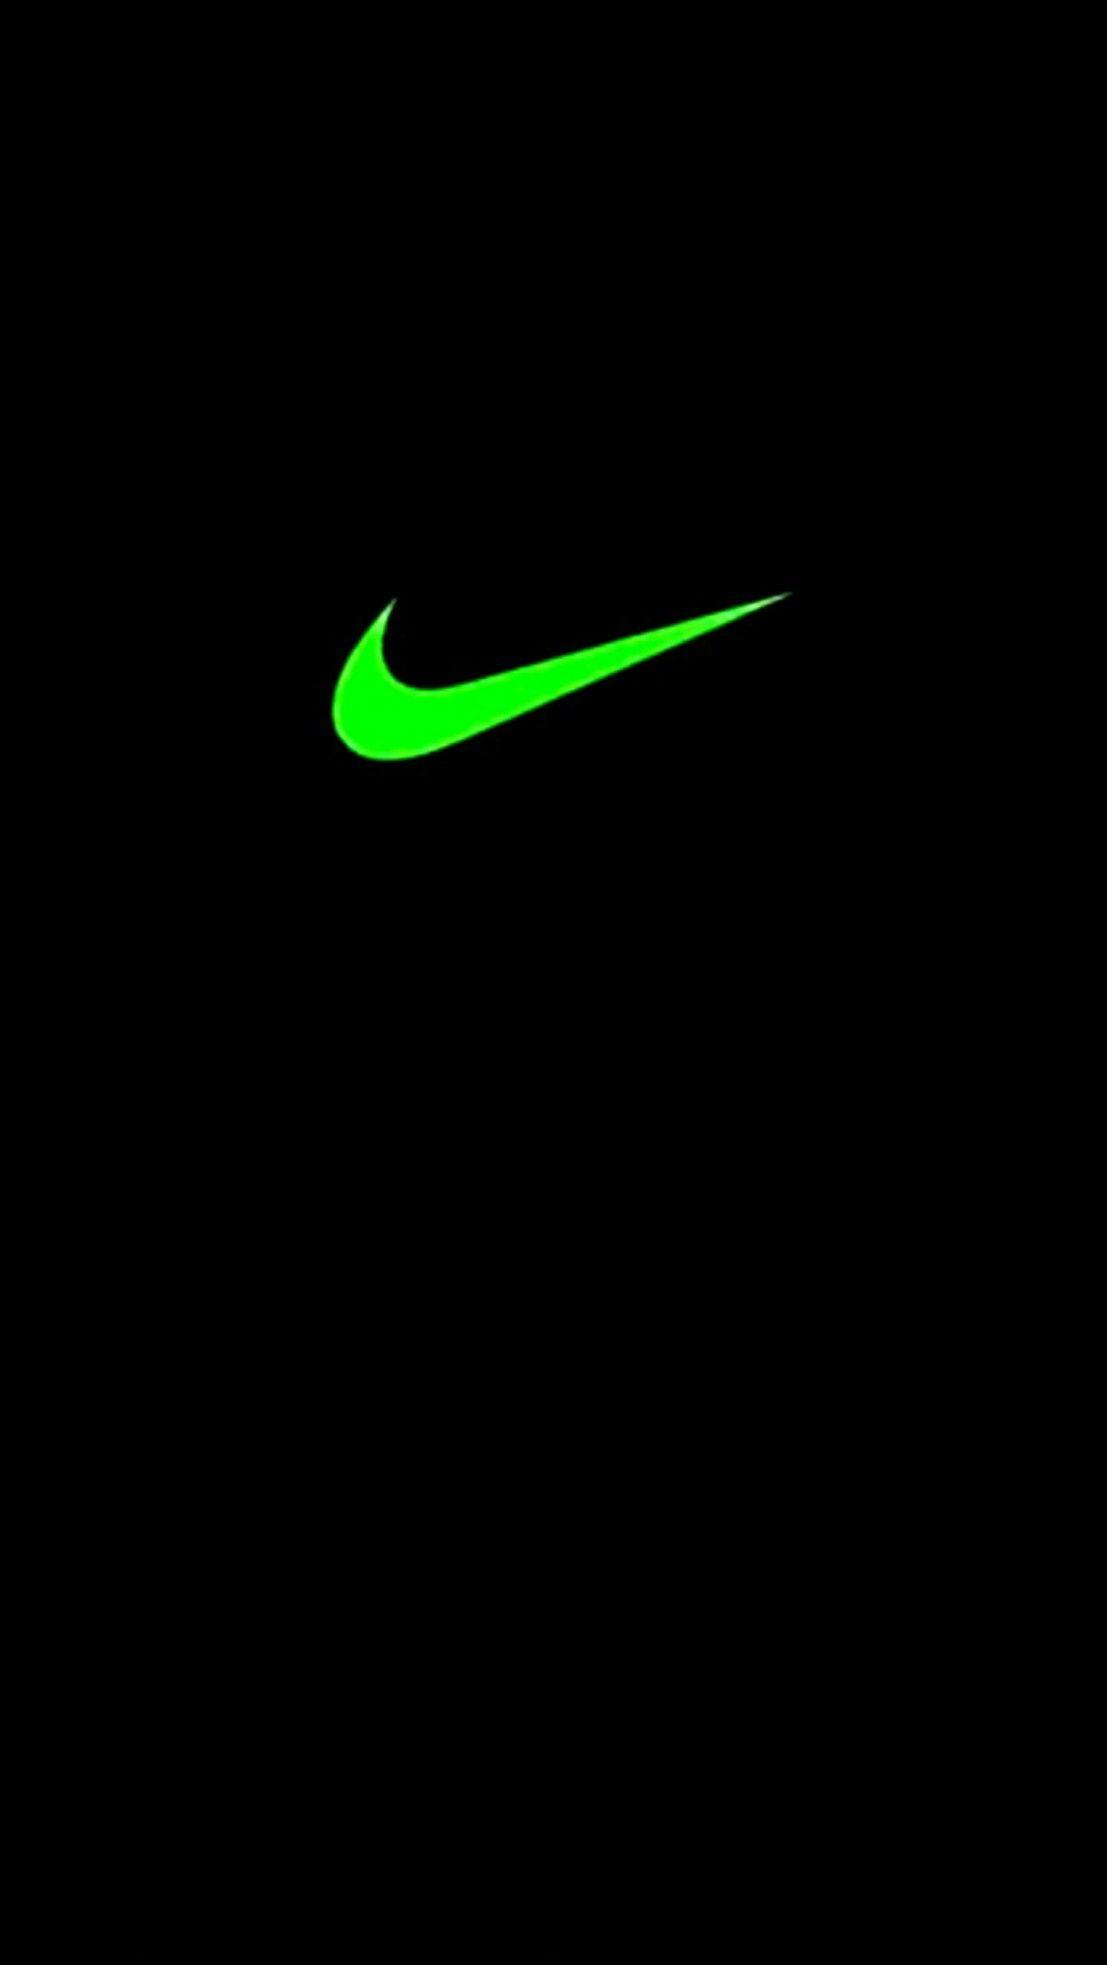 nike #black #wallpaper #android #iphone. Nike wallpaper, Nike